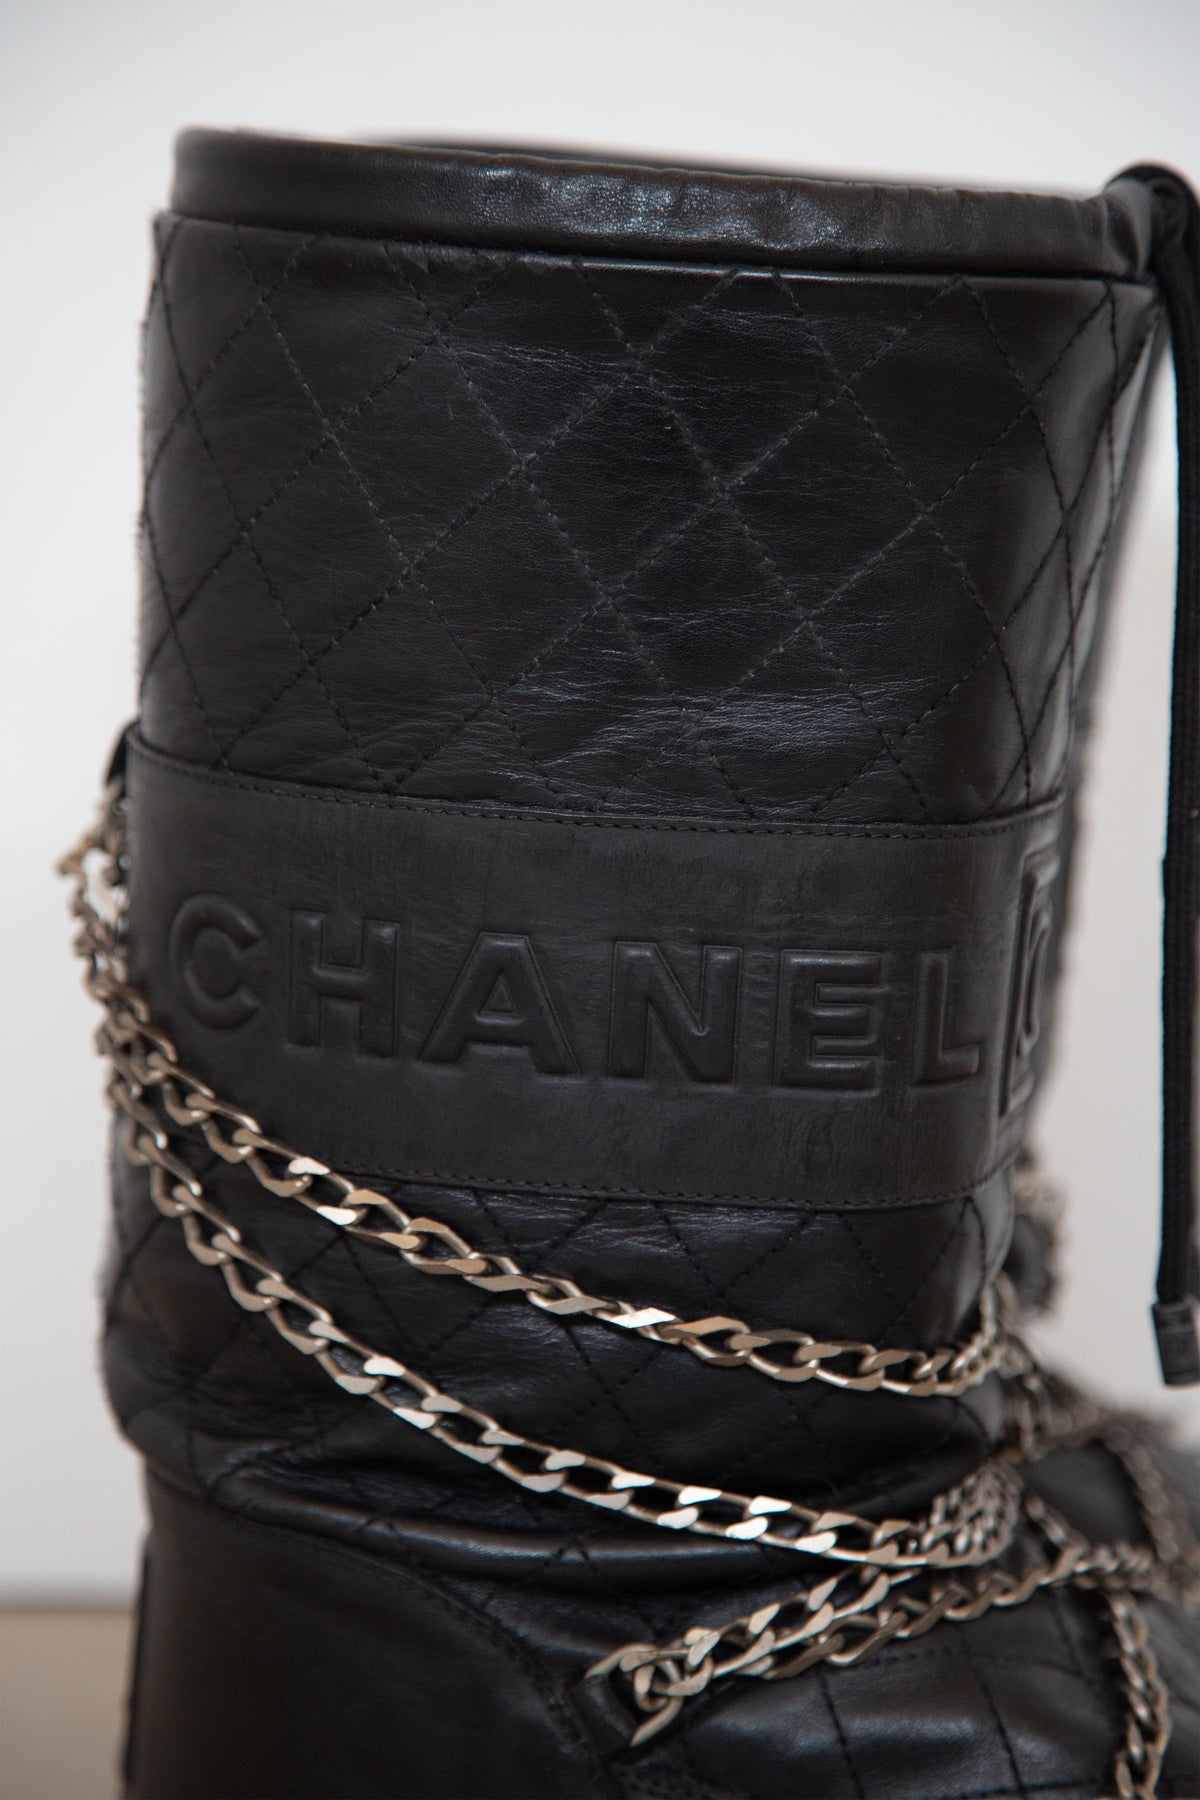 Chanel moonboots